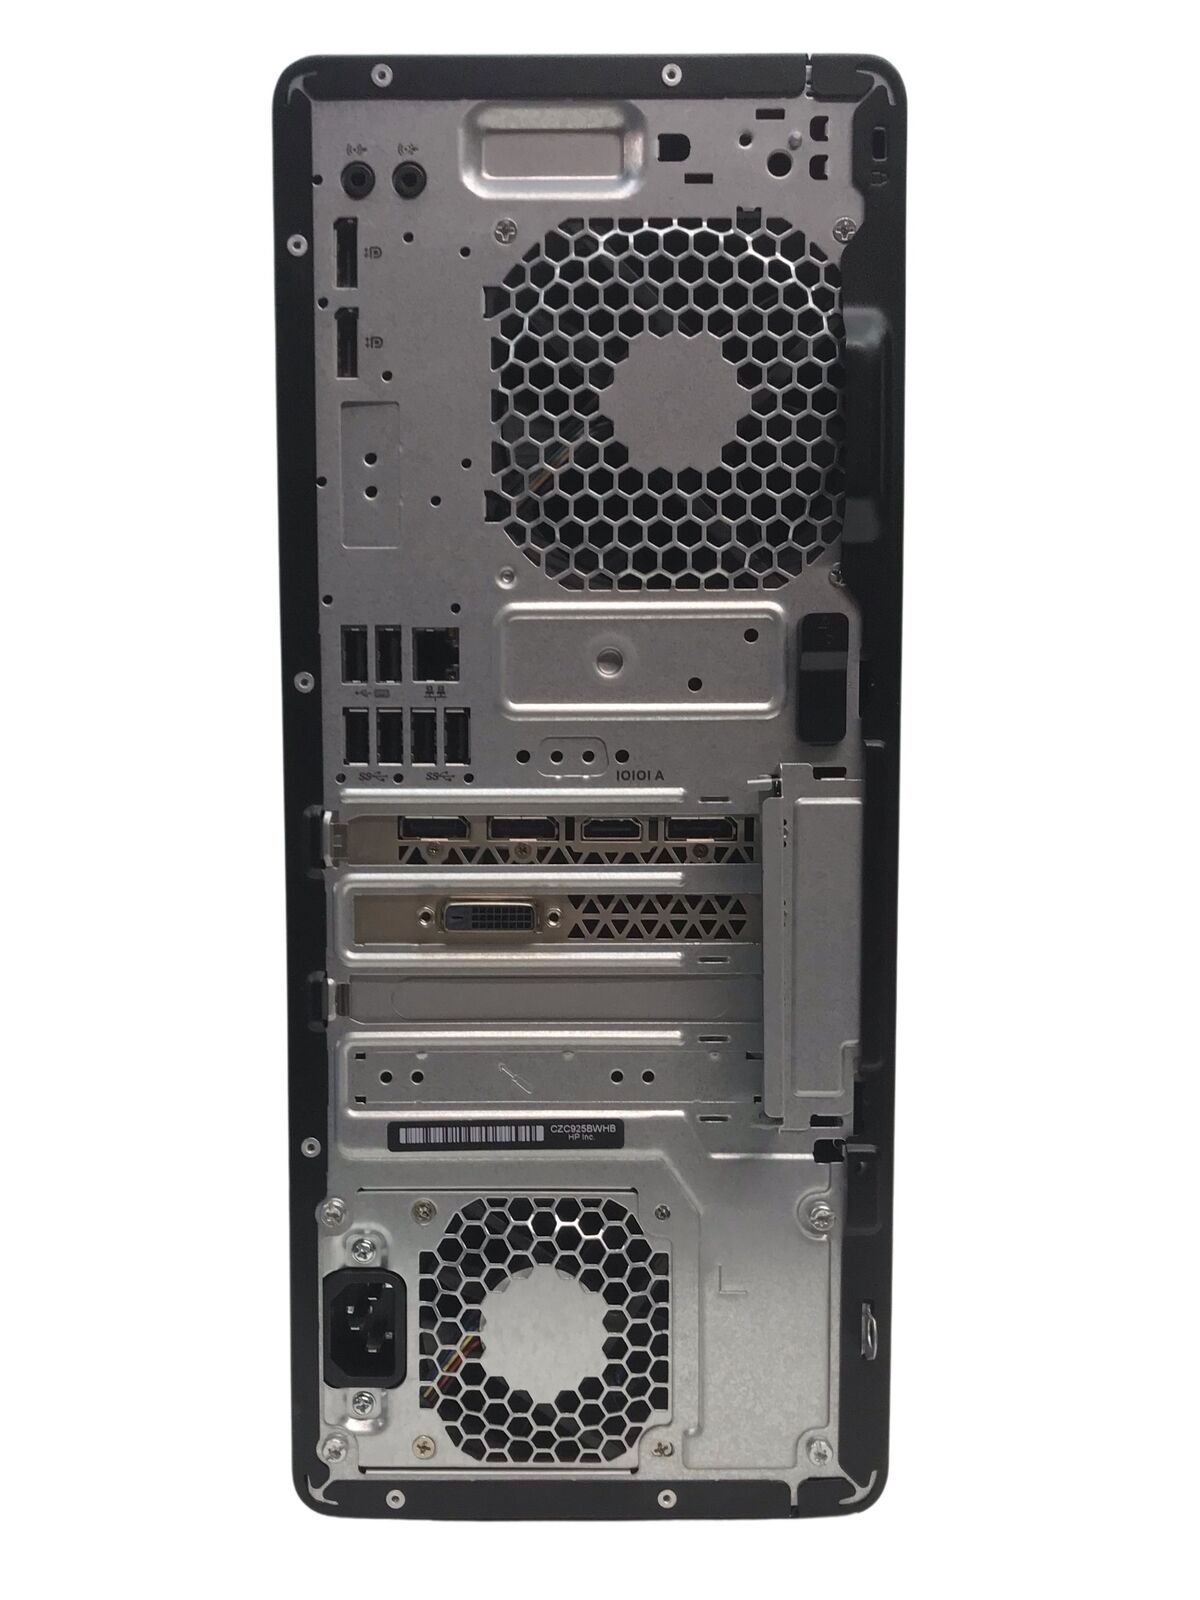 HP EliteDesk 800 G4 Tower Refurbished PC | Intel i7-8700 | 16GB RAM | 1TB Storage